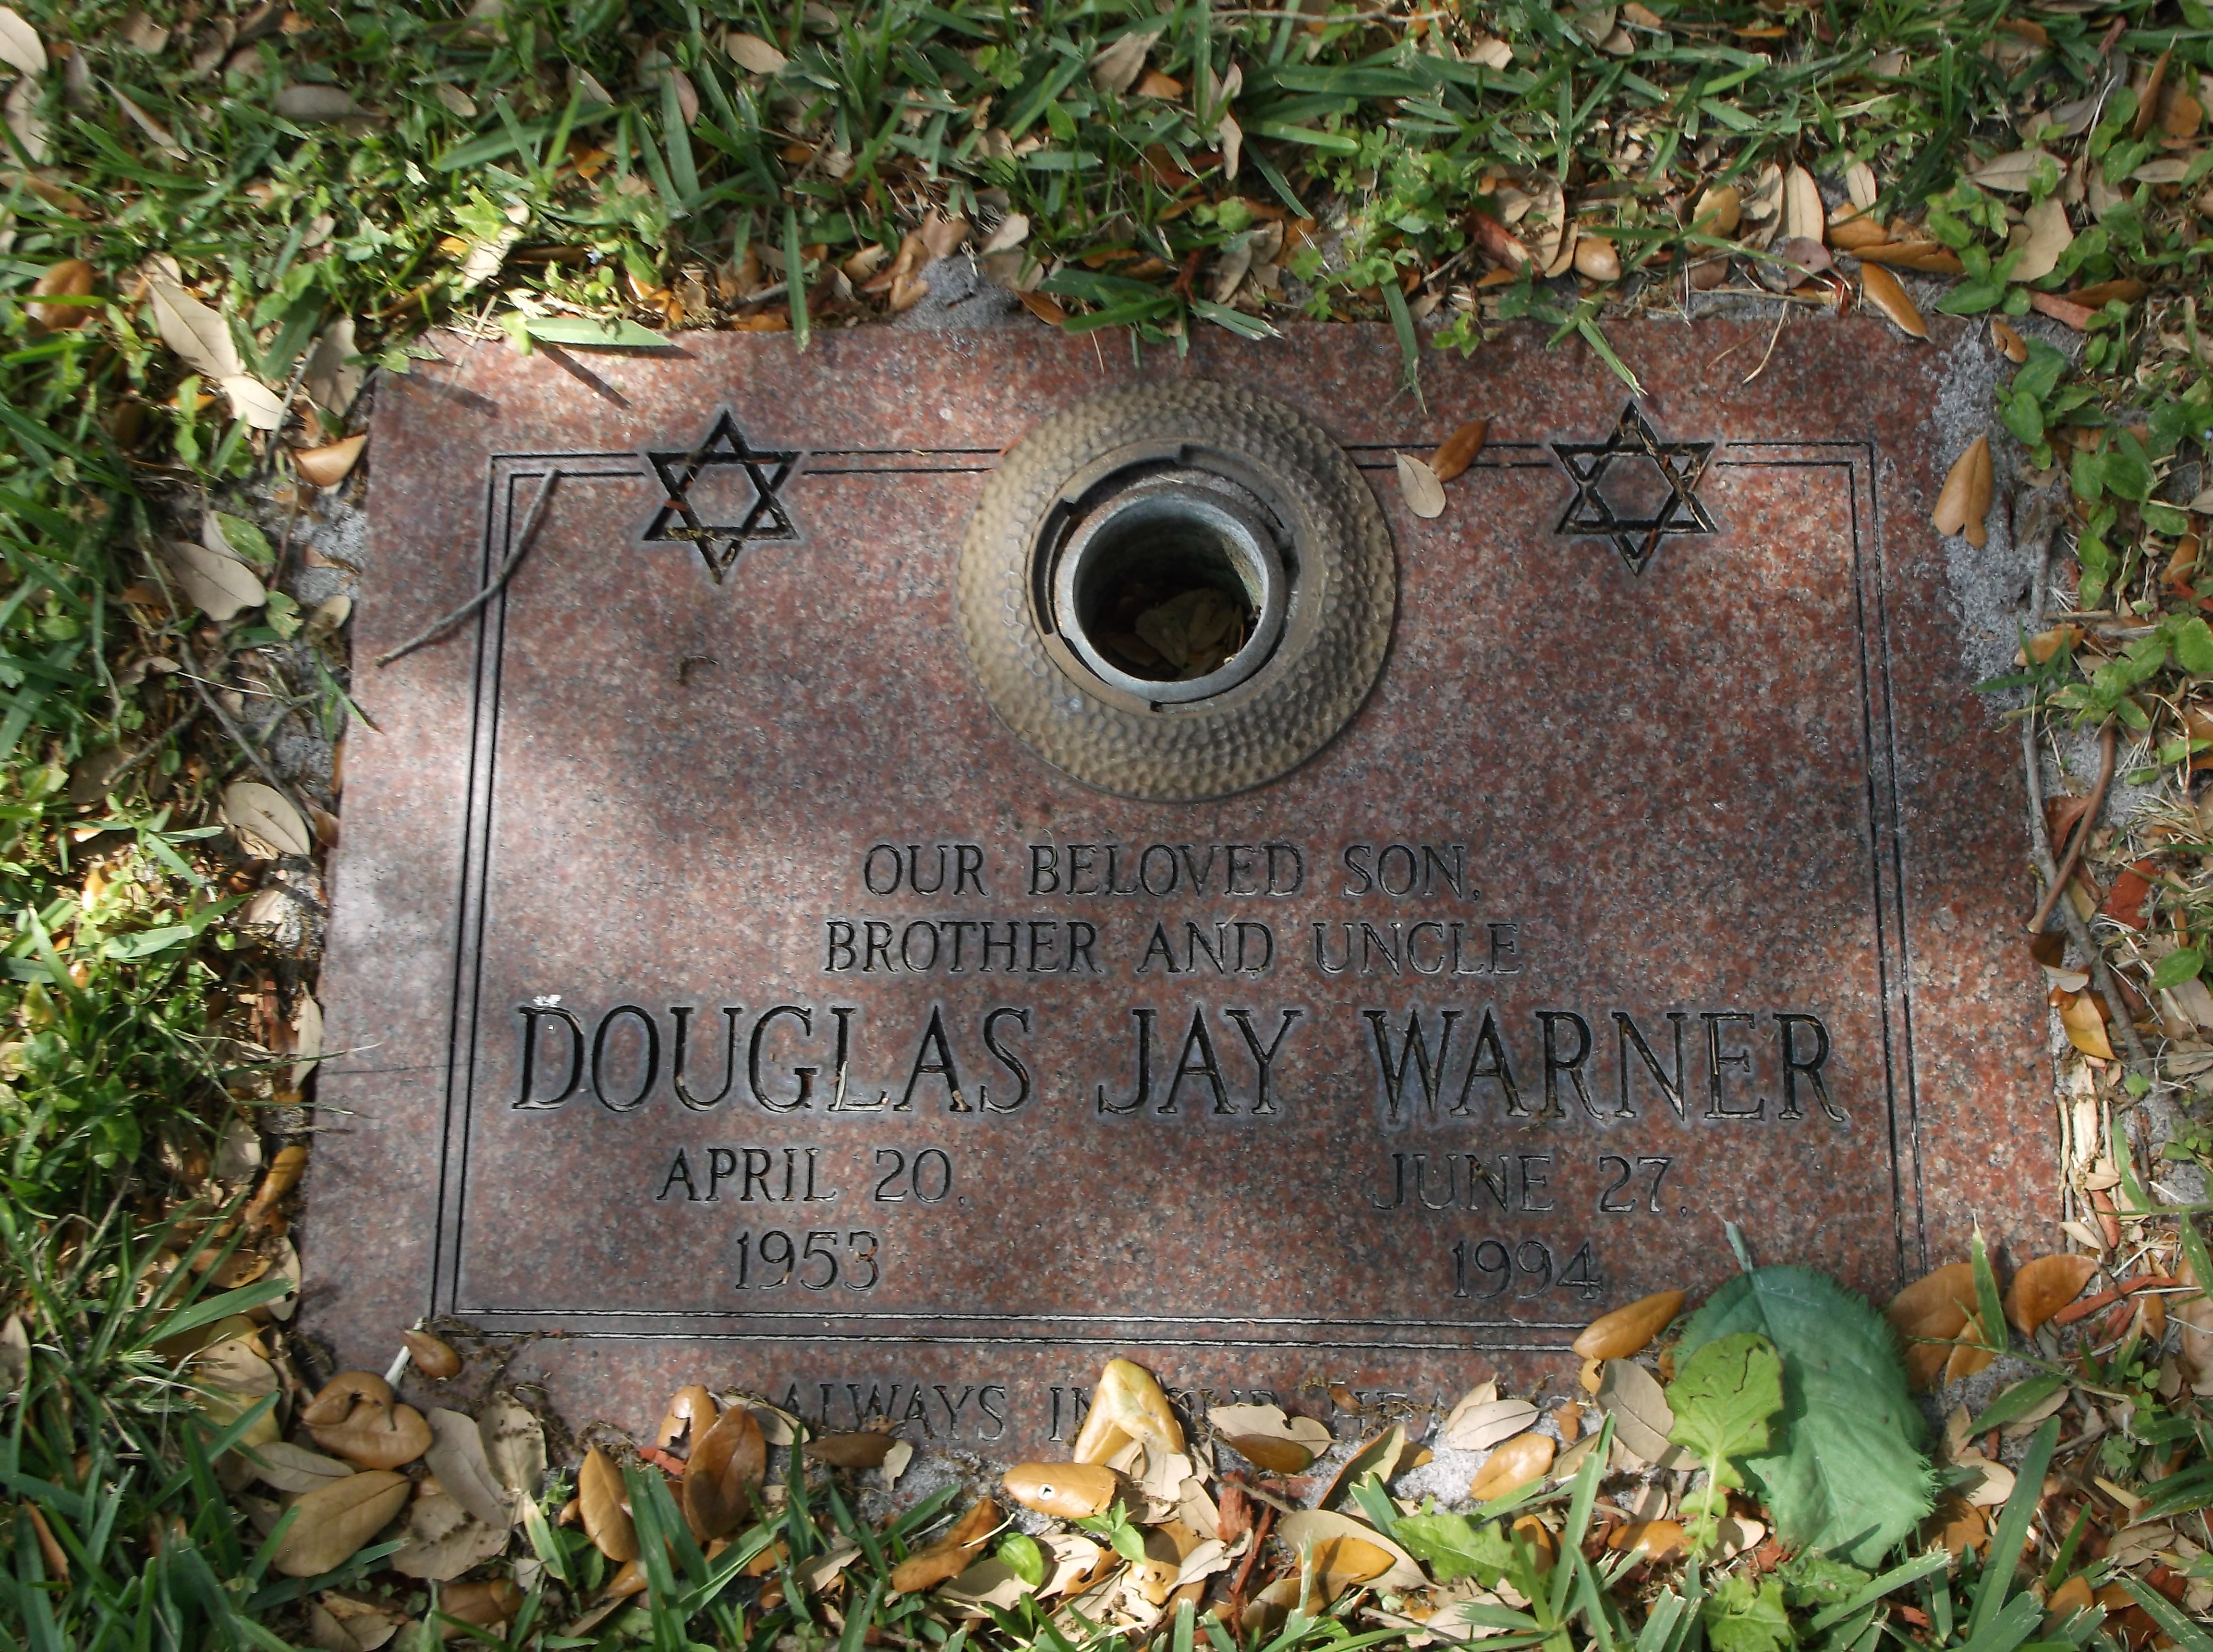 Douglas Jay Warner